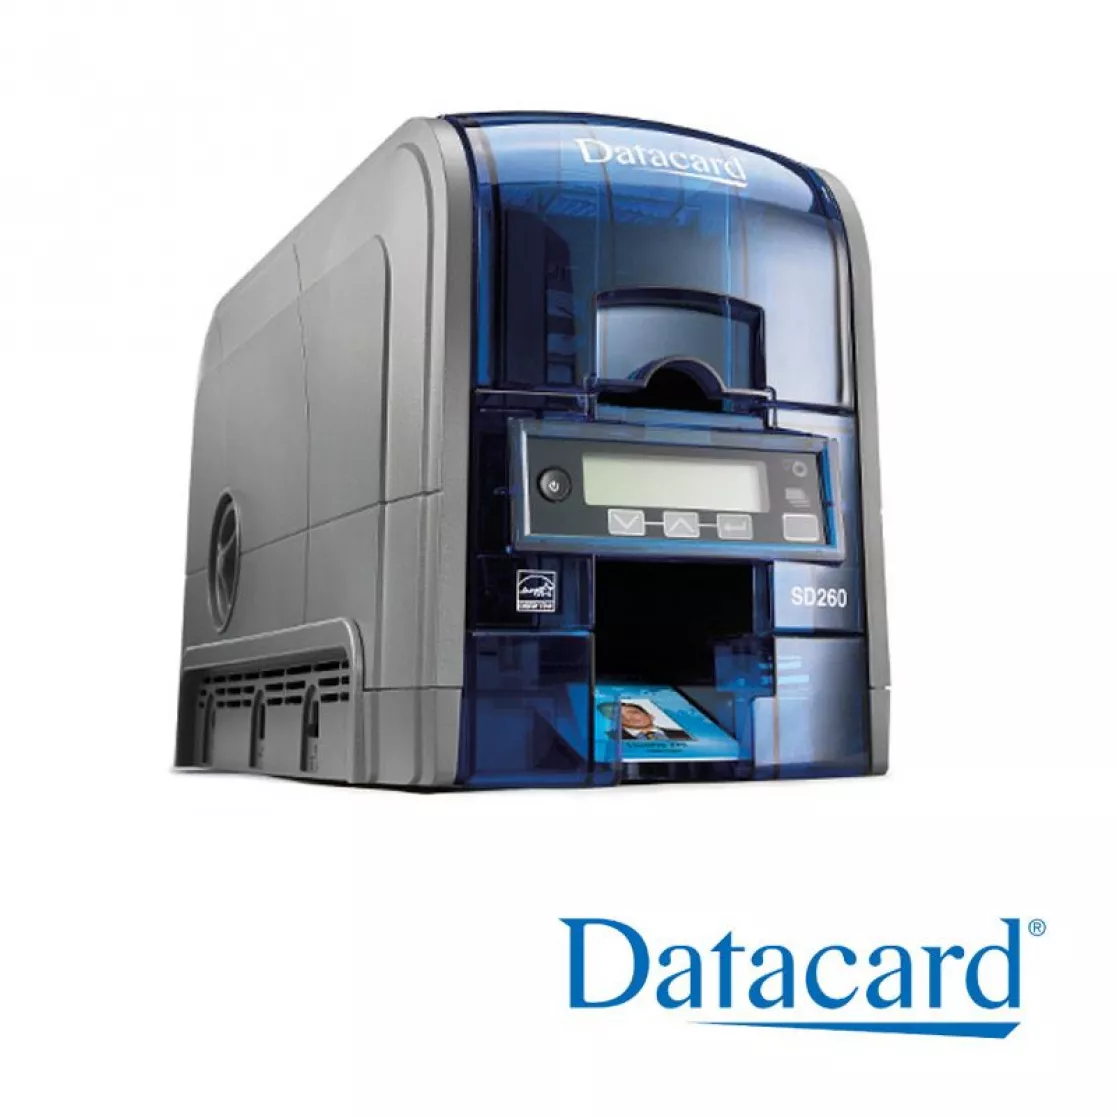 plastic card printer Datacard SD260